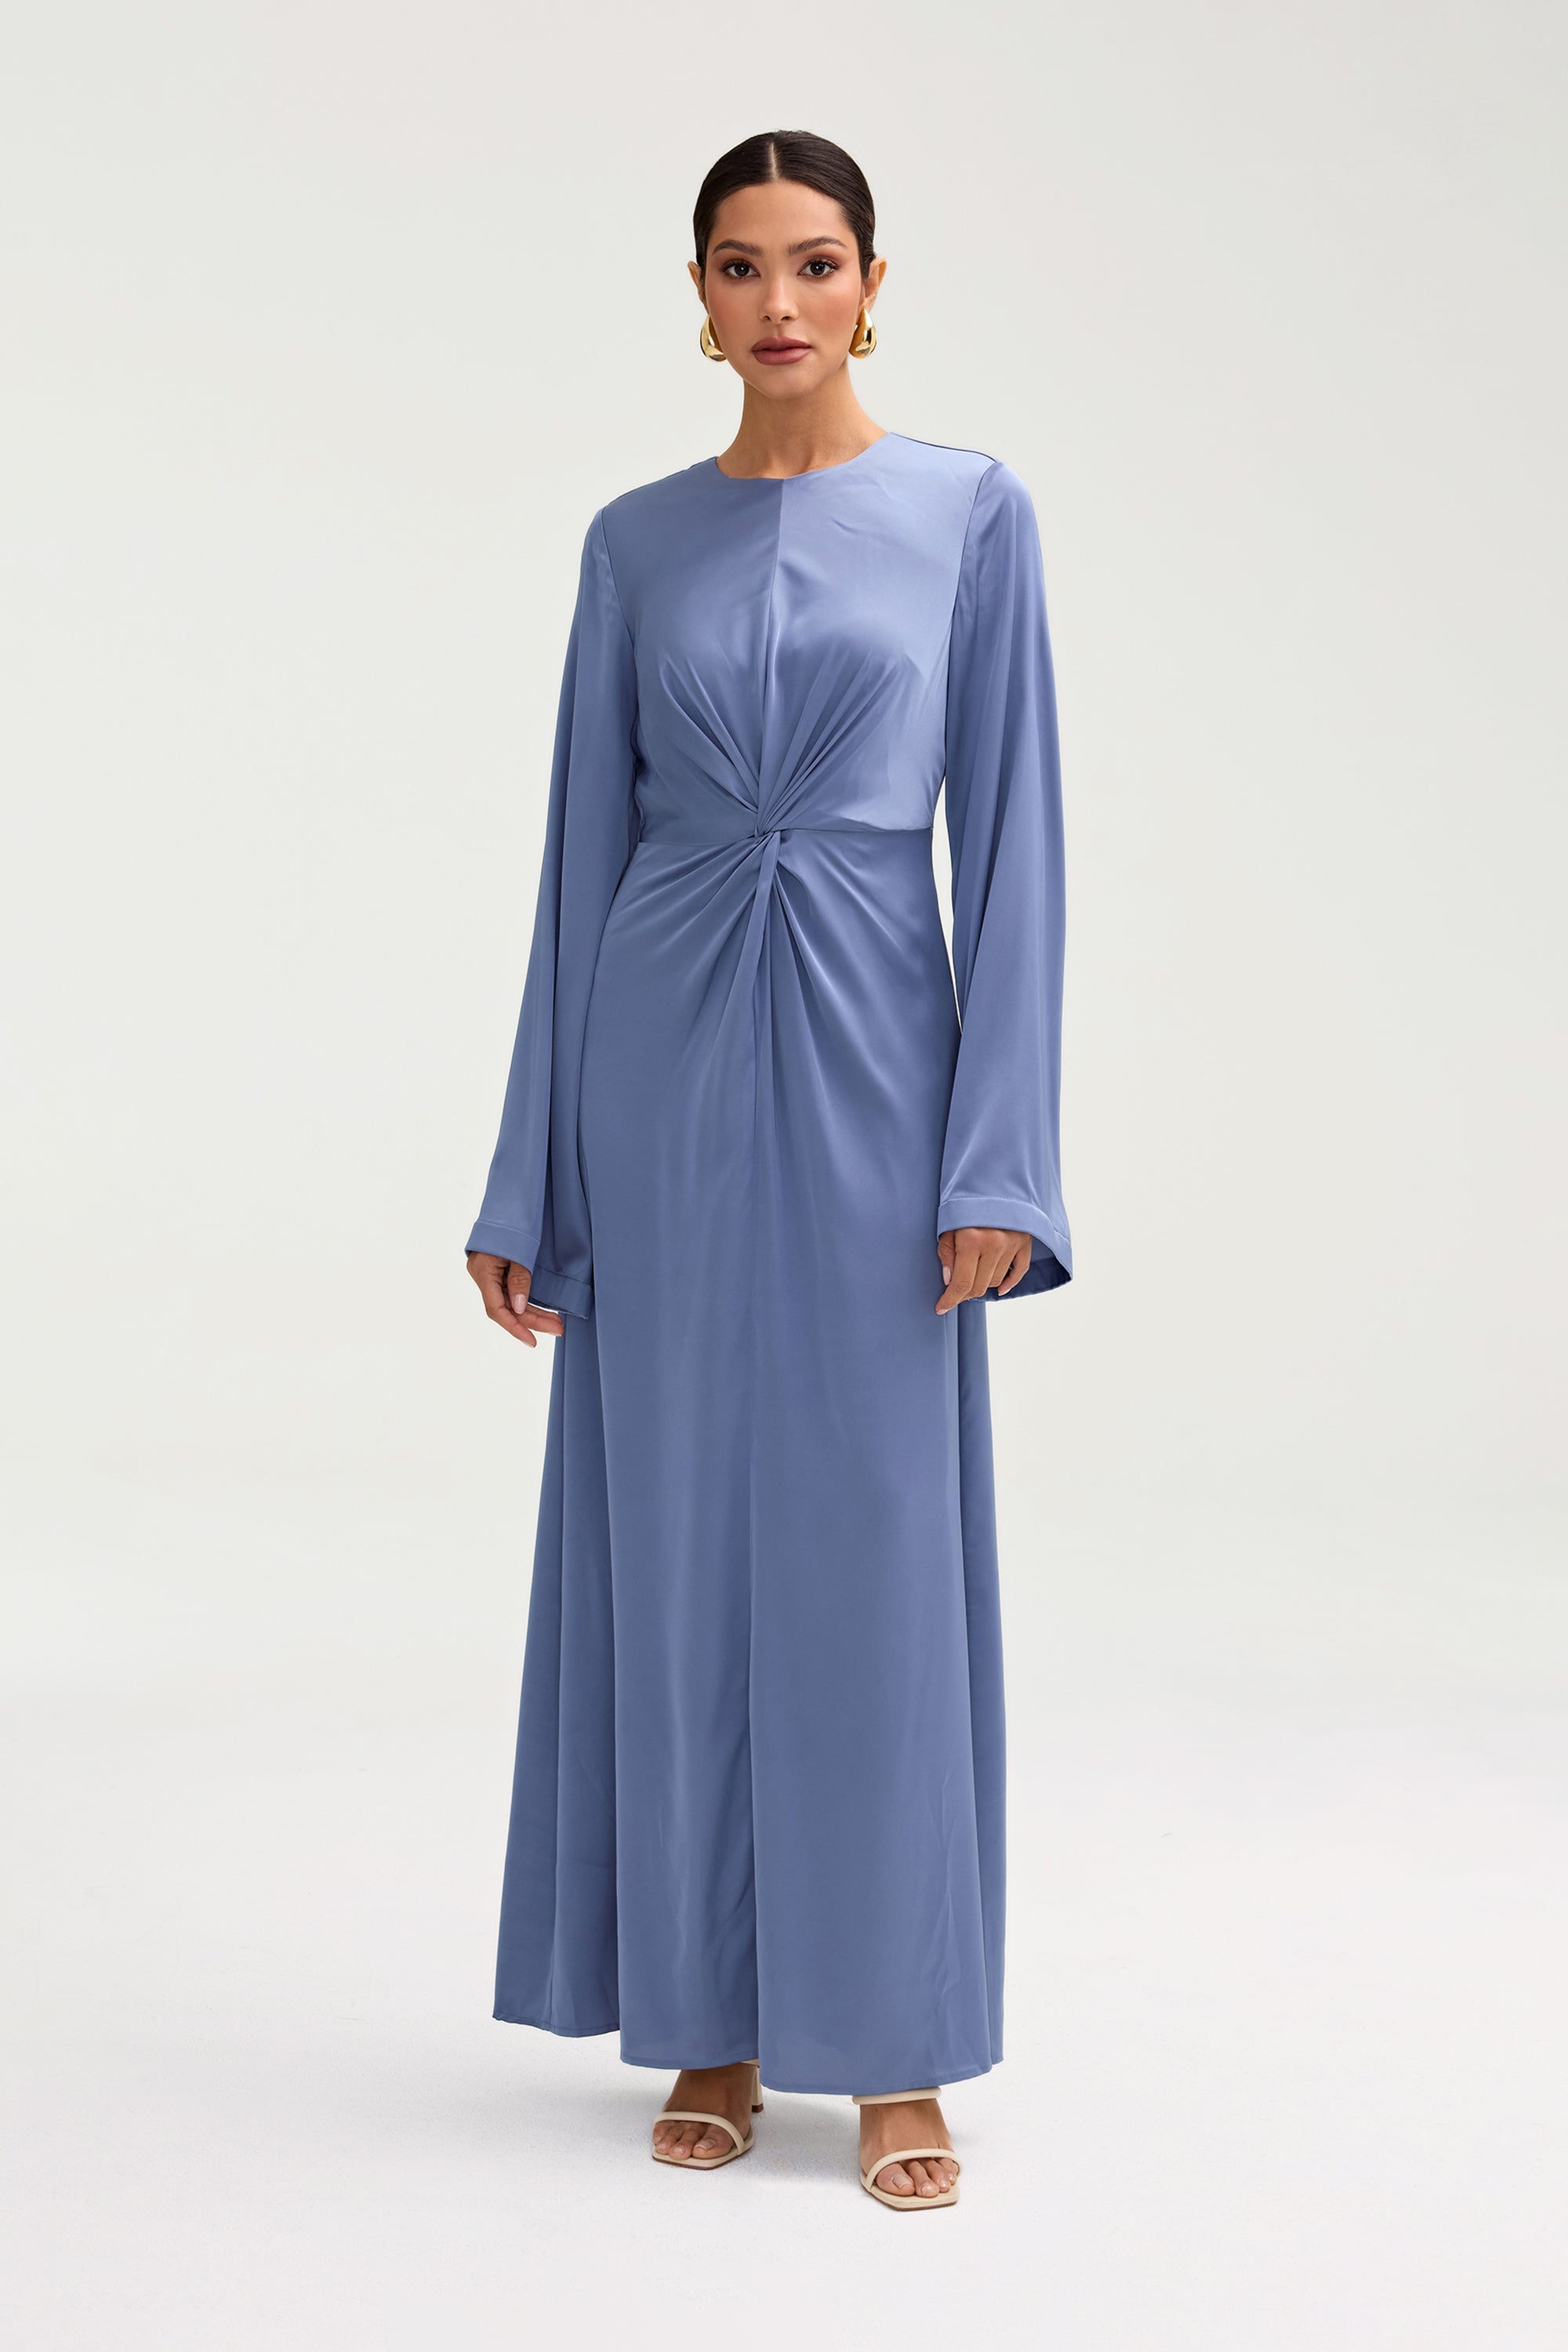 Duha Satin Twist Front Maxi Dress - Dusty Blue Clothing Veiled 